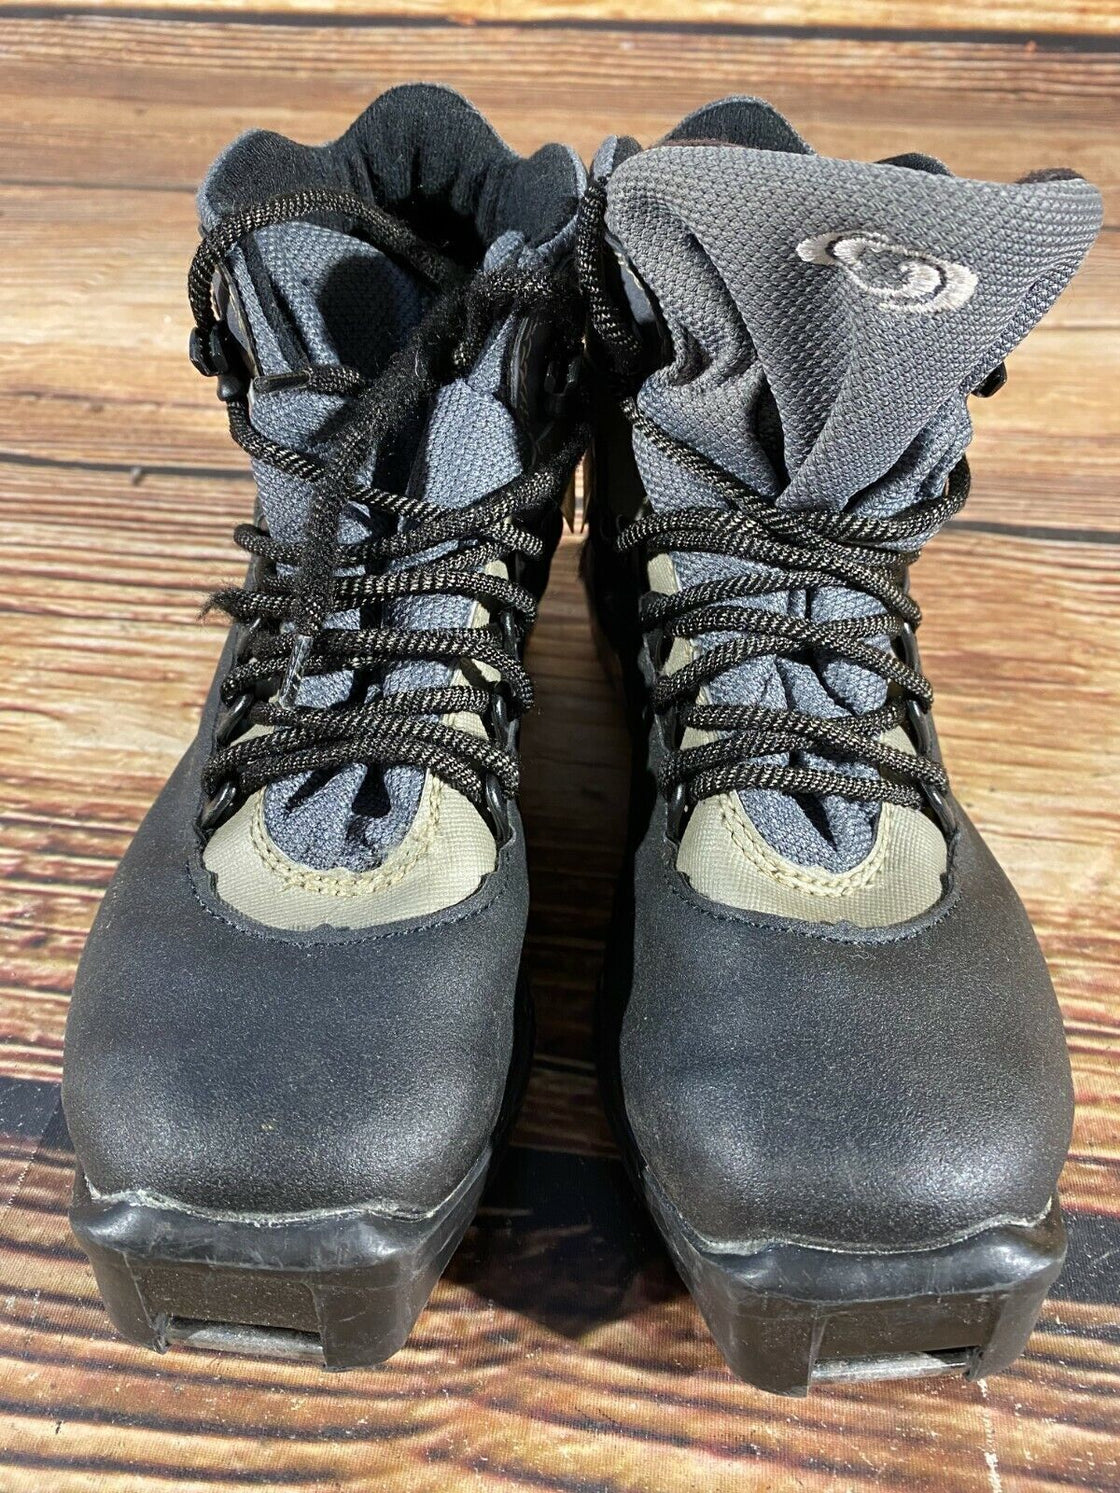 SALOMON Kids Nordic Cross Country Ski Boots Size EU35 US4 SNS S-18